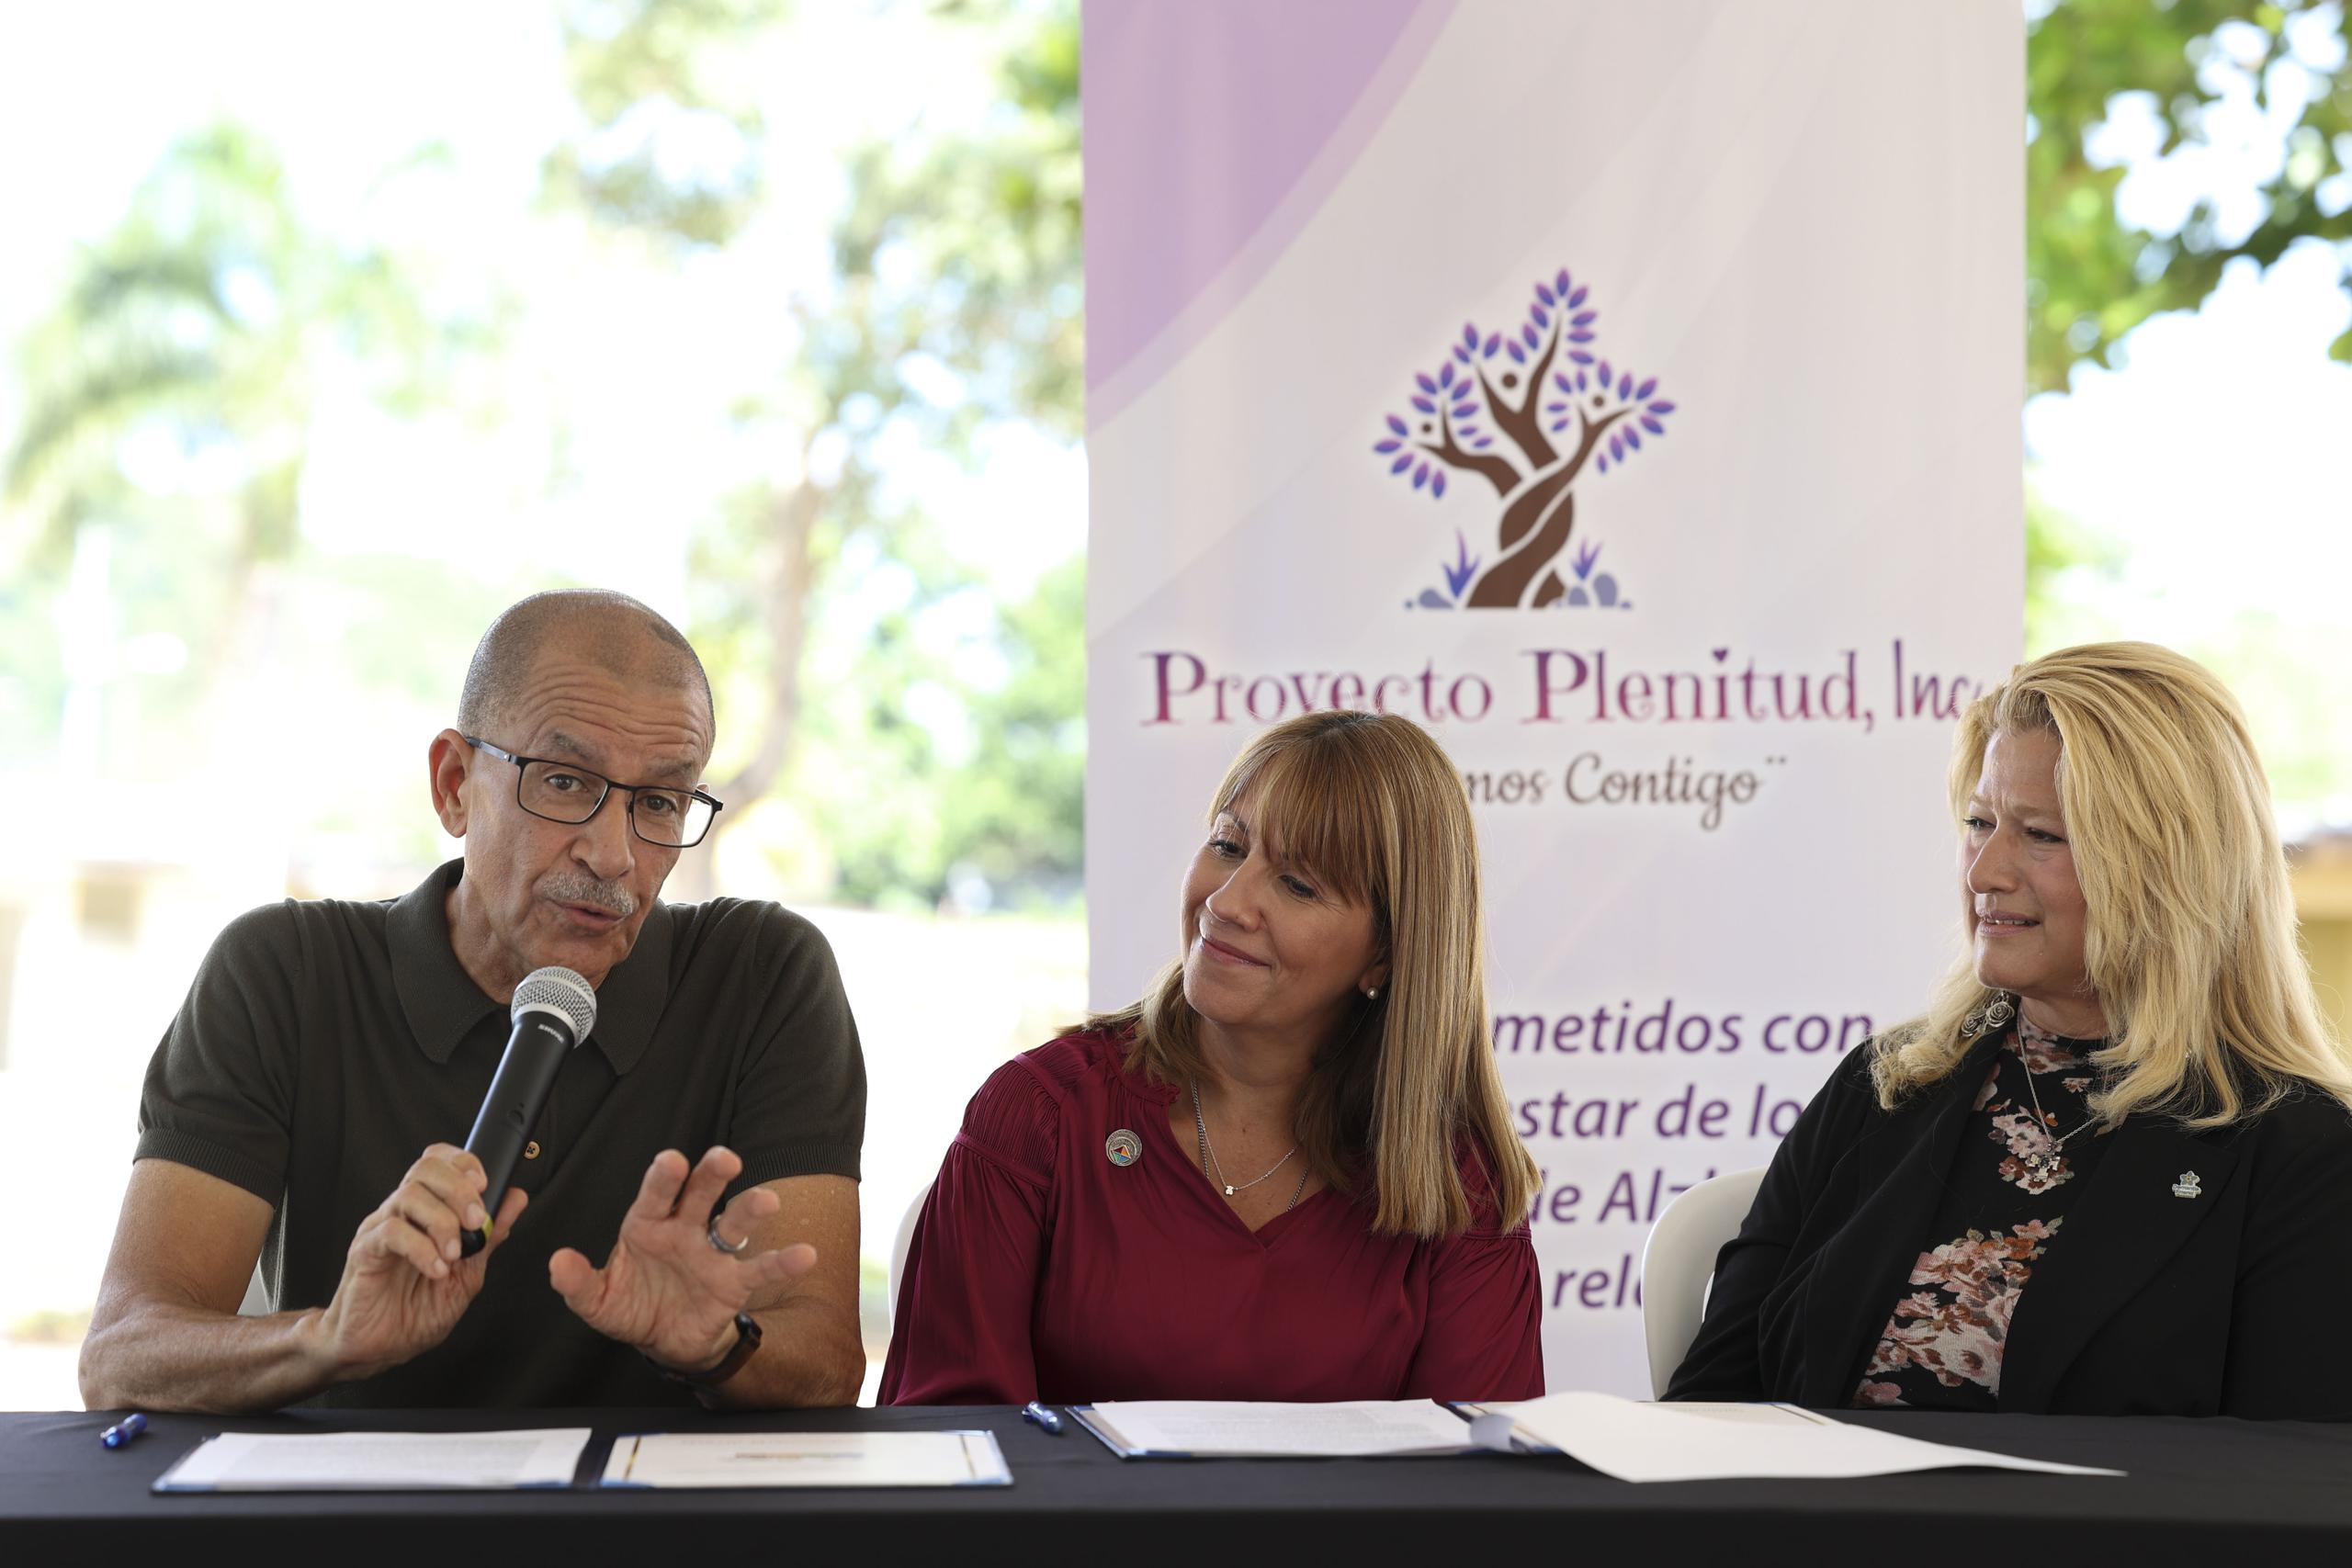 De izquierda a derecha, el alcalde de Toa Baja, Bernardo "Betito" Márquez, la directora ejecutiva, del Proyecto Plenitud, Dra. Florencia Velázquez y Ana Gratacós, directora de Dementia Friends.